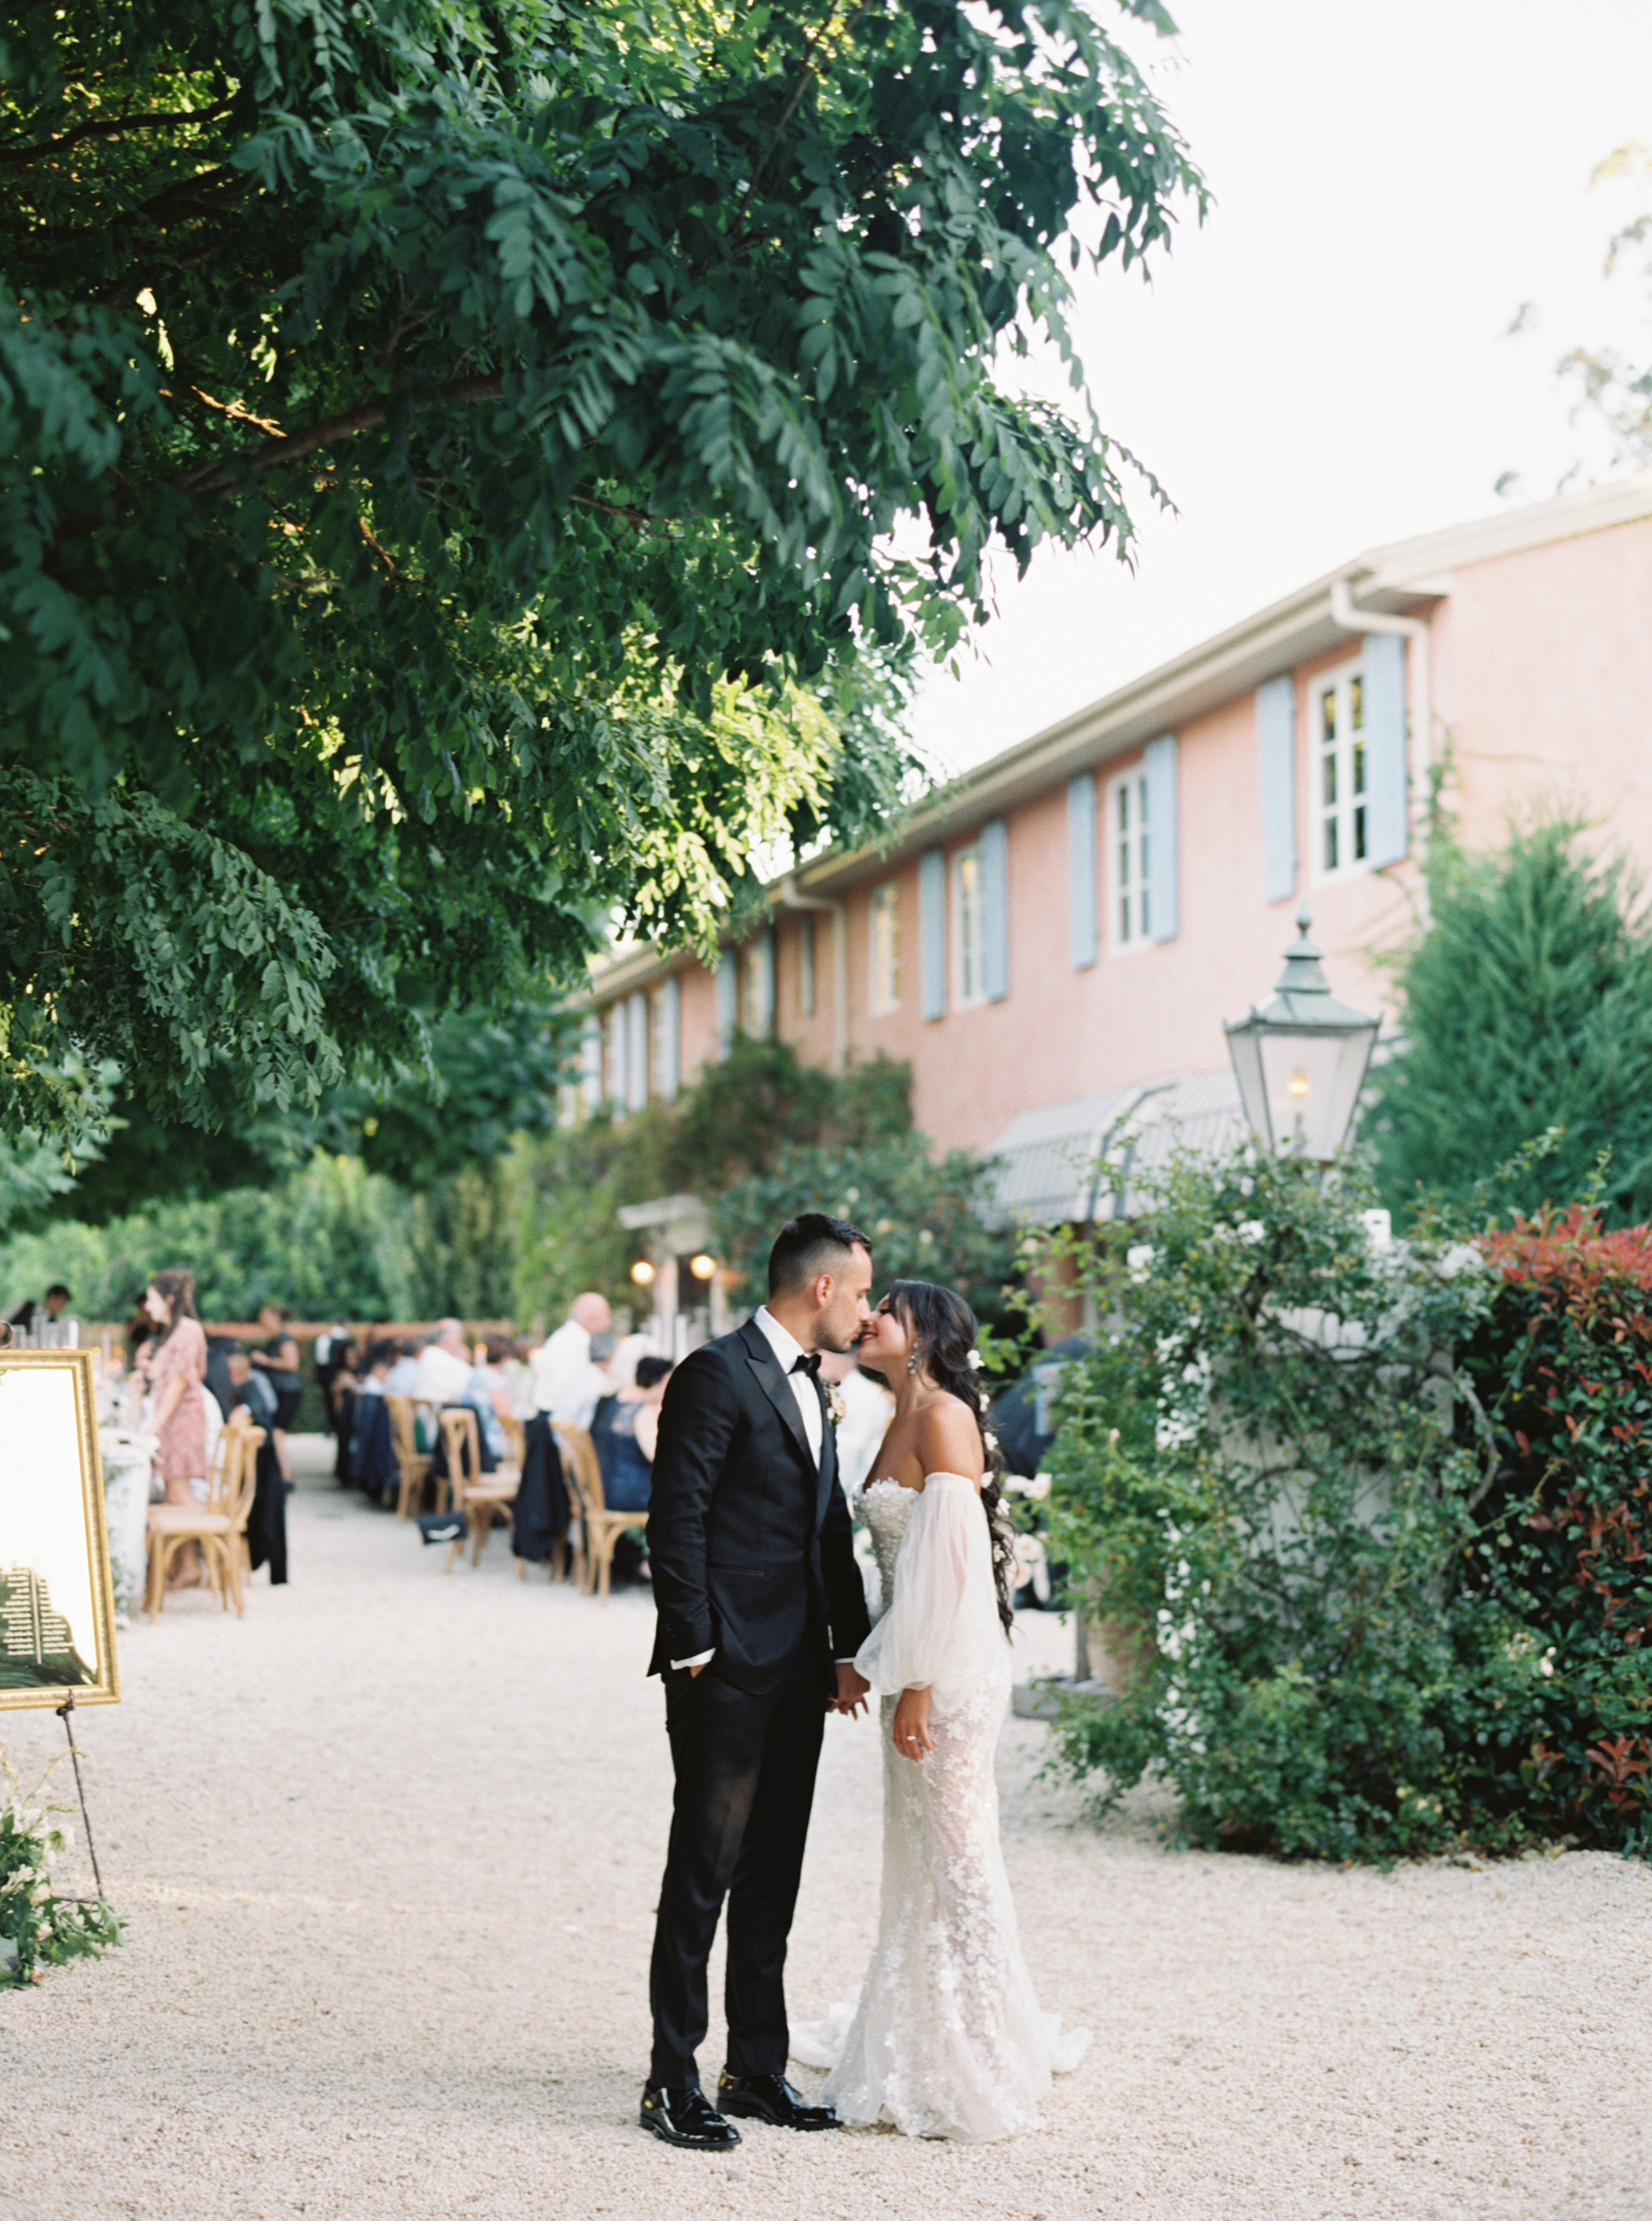 Sheri McMahon - Hunter Valley Wedding Venue Redleaf Italian Style villa for your dream Tuscan inspired wedding in Australia